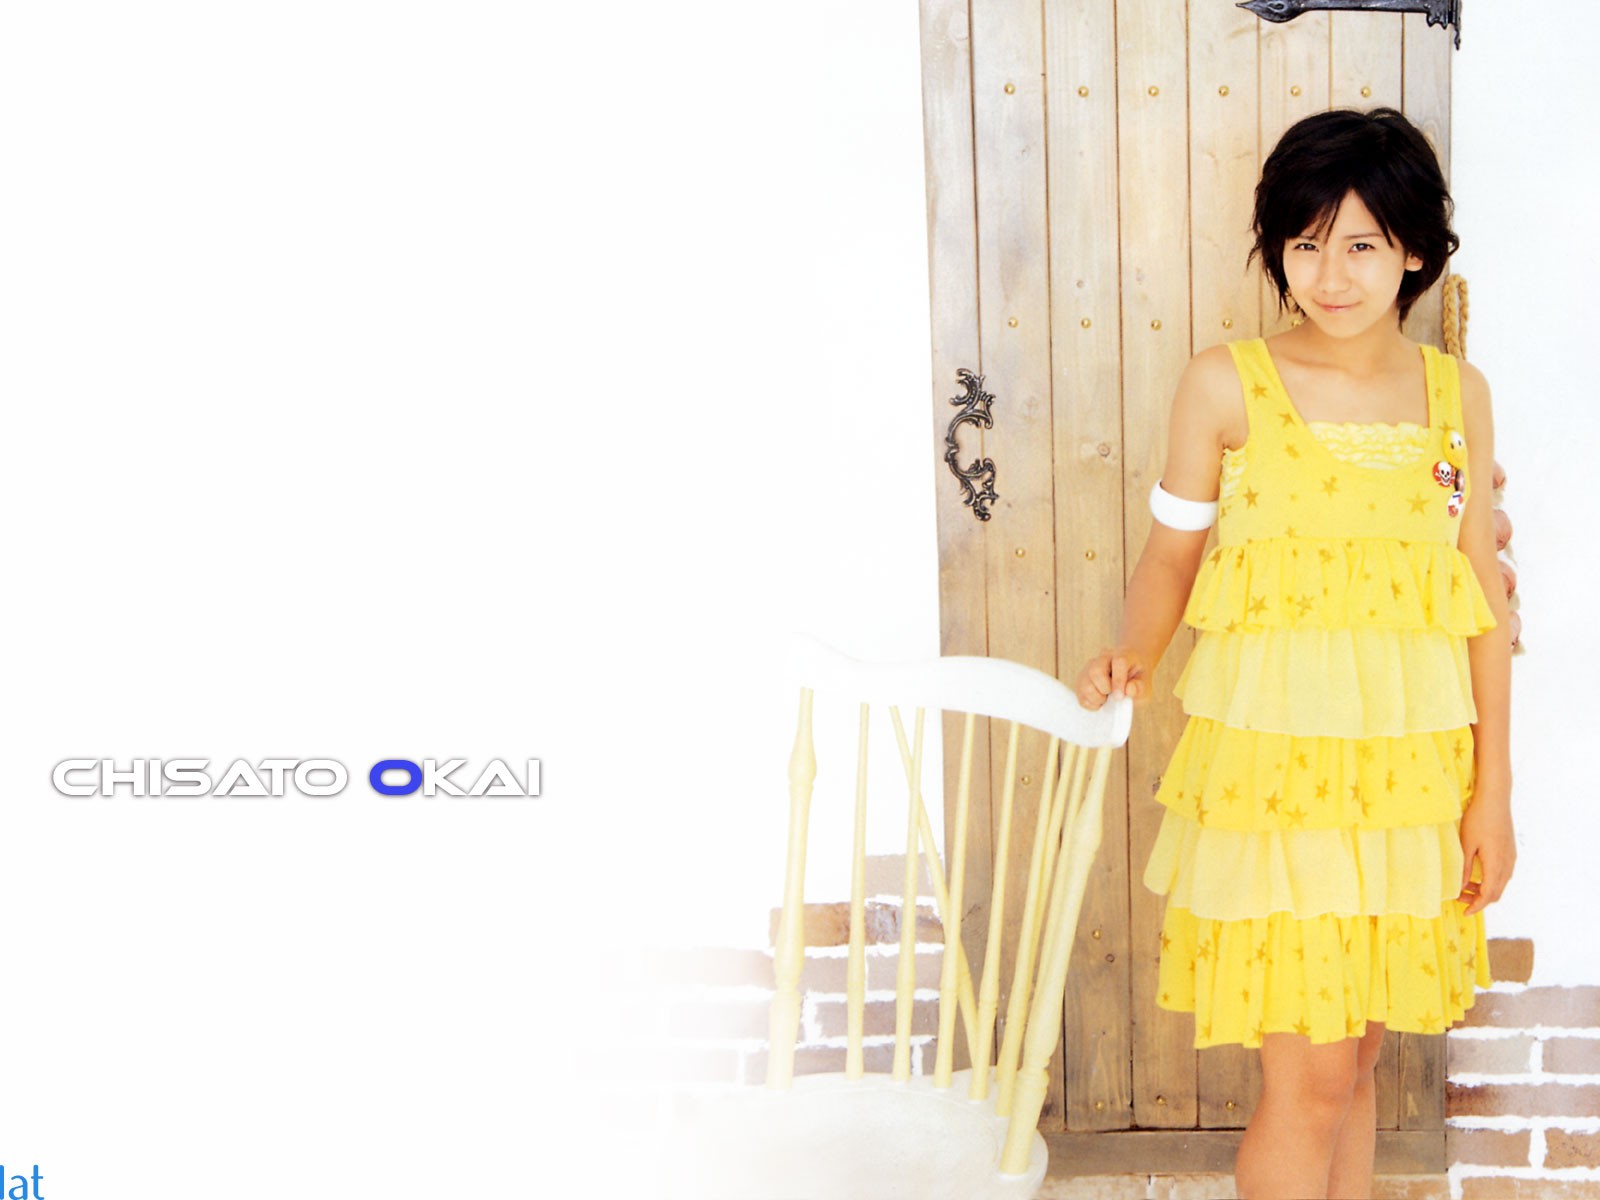 Cute Japanese beauty photo portfolio #6 - 1600x1200